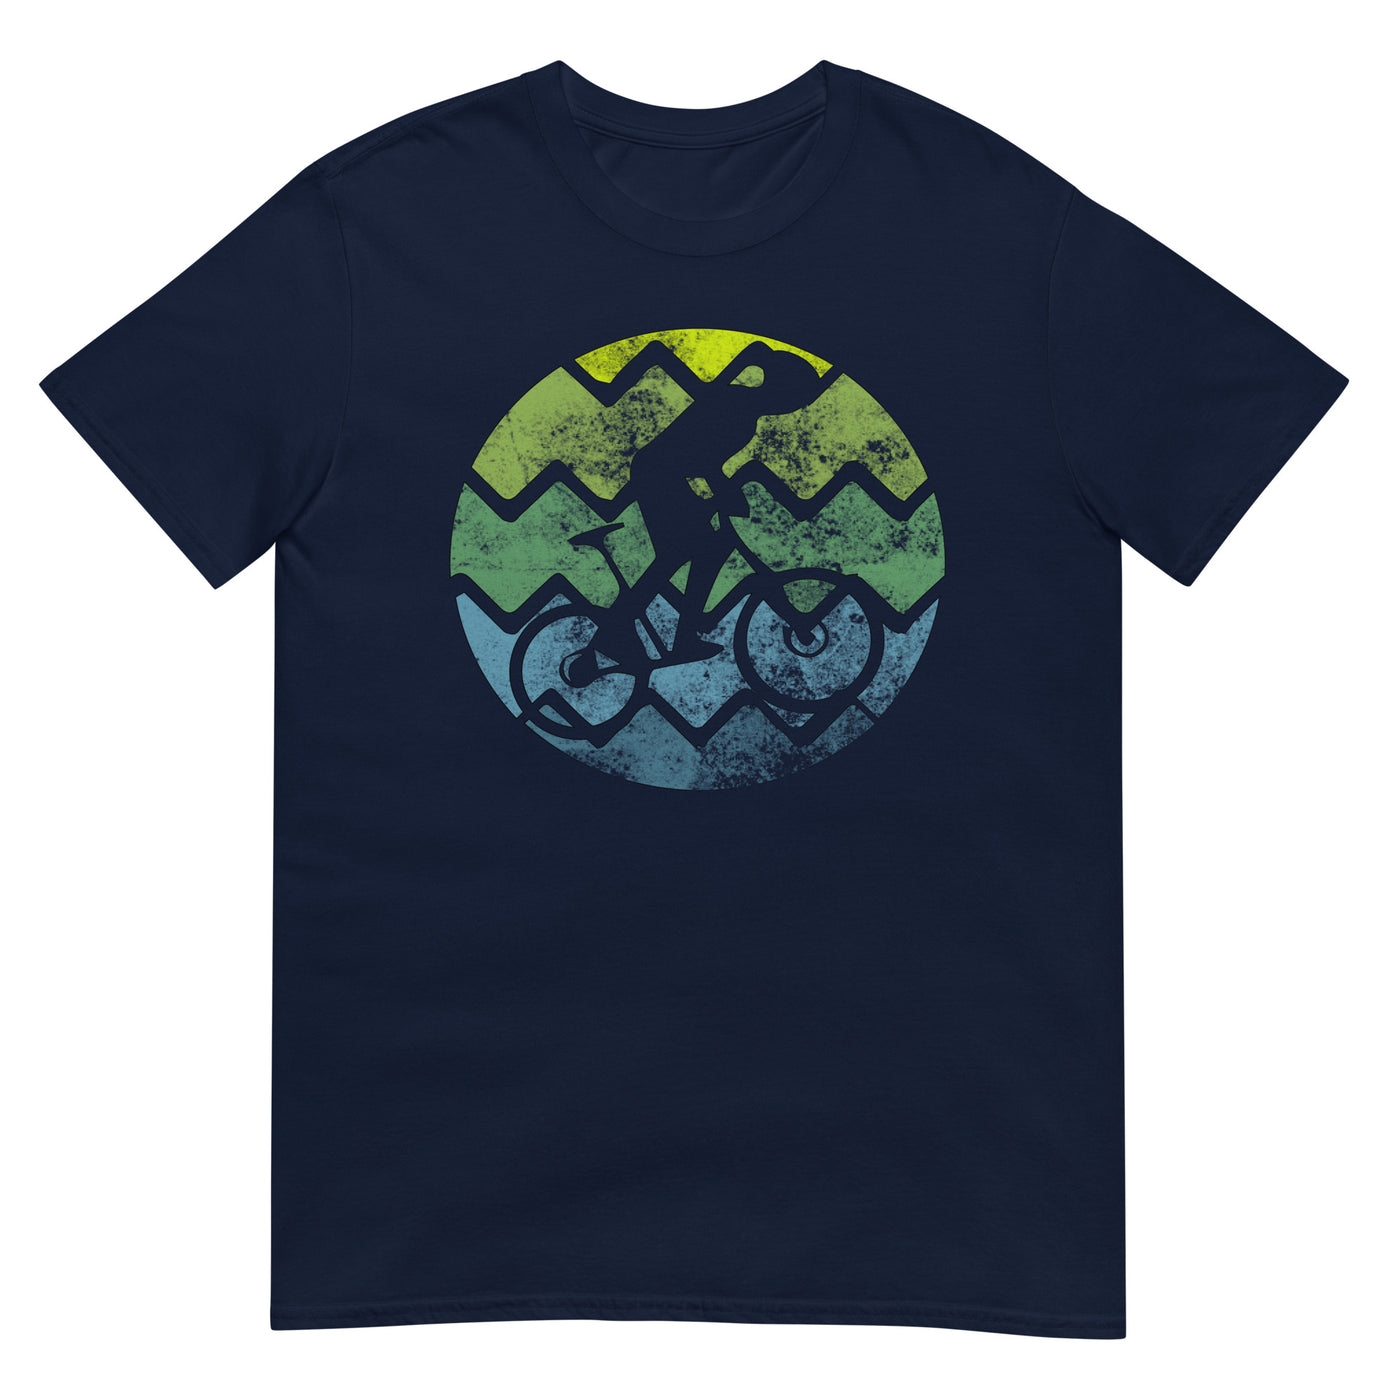 Retro - Radfahren - T-Shirt (Unisex) fahrrad xxx yyy zzz Navy